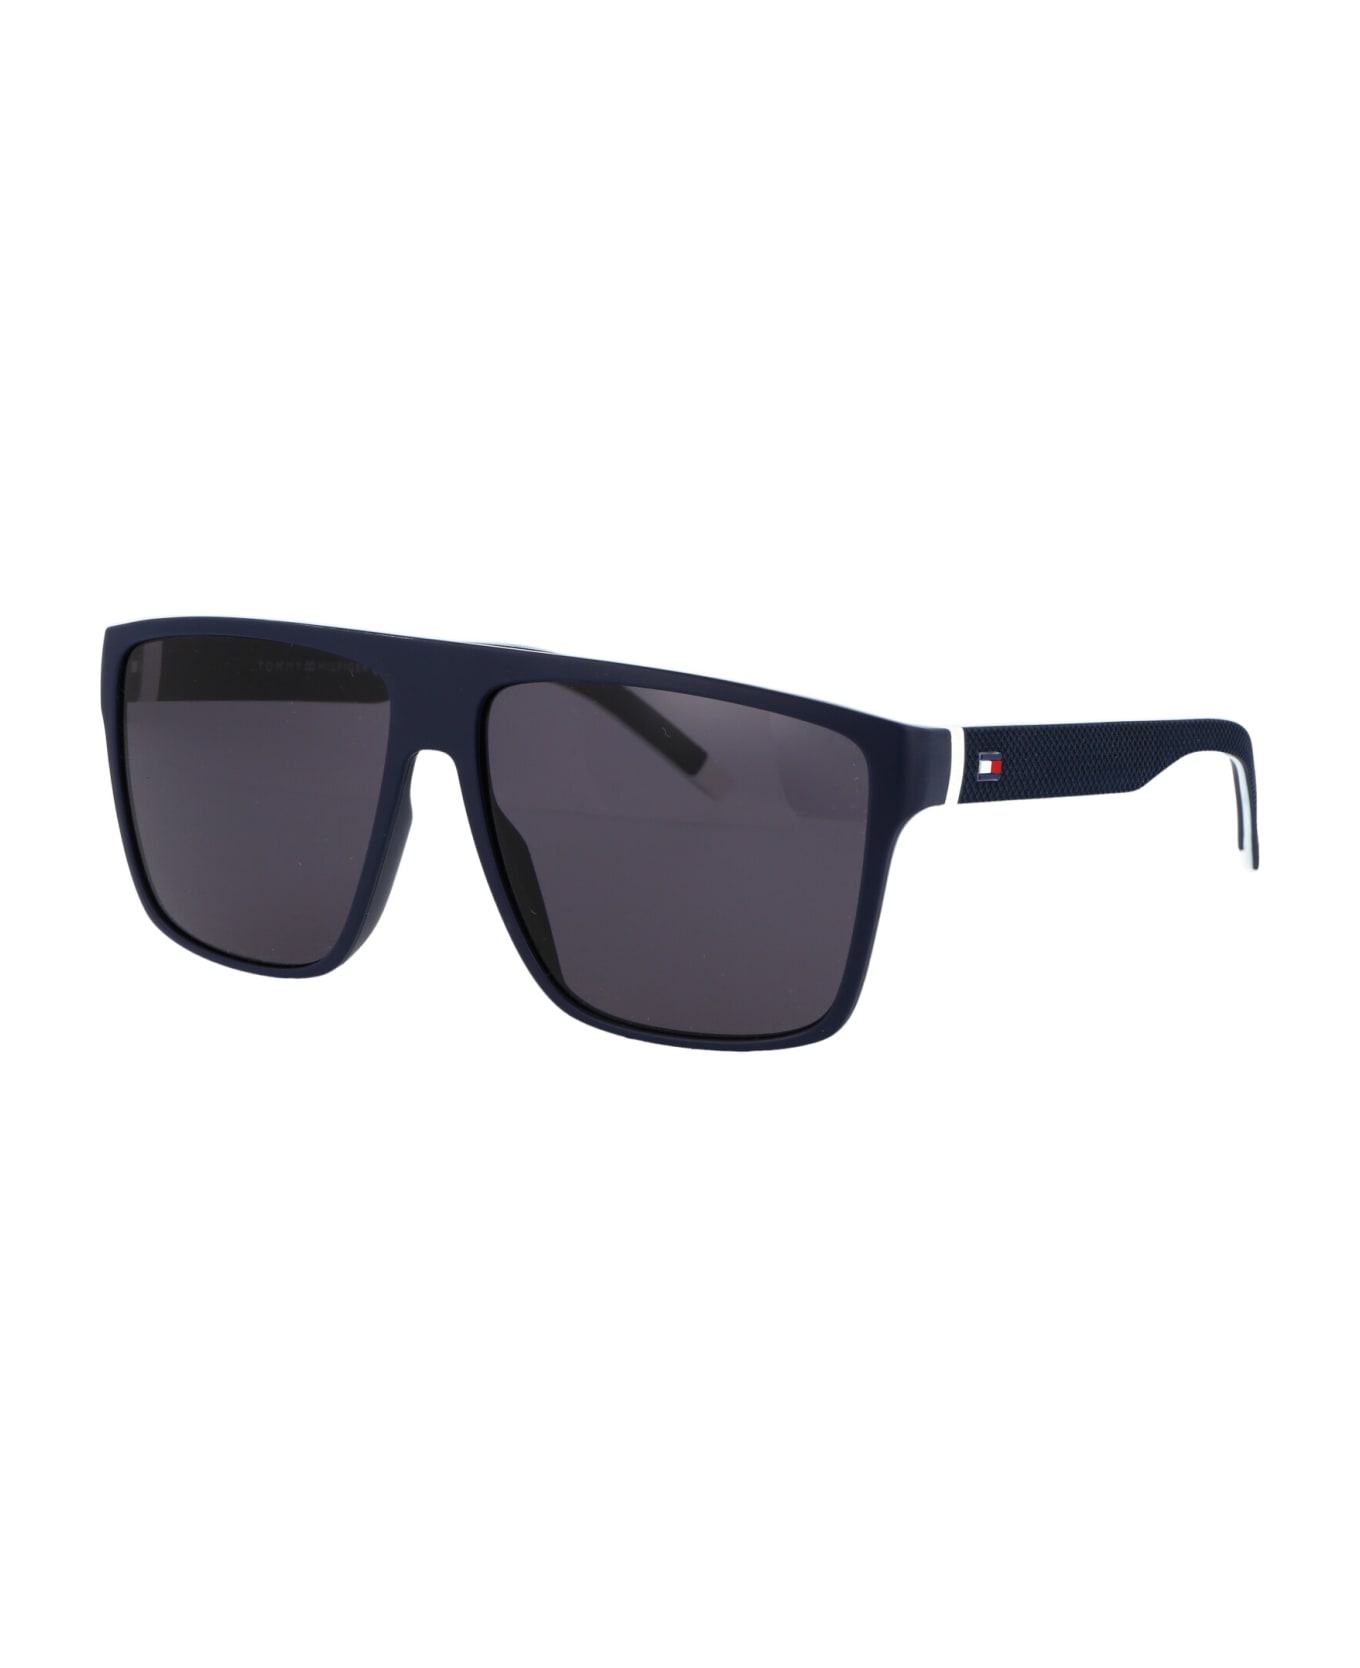 Tommy Hilfiger Th 1717/s Sunglasses - 0JUIR BLUE